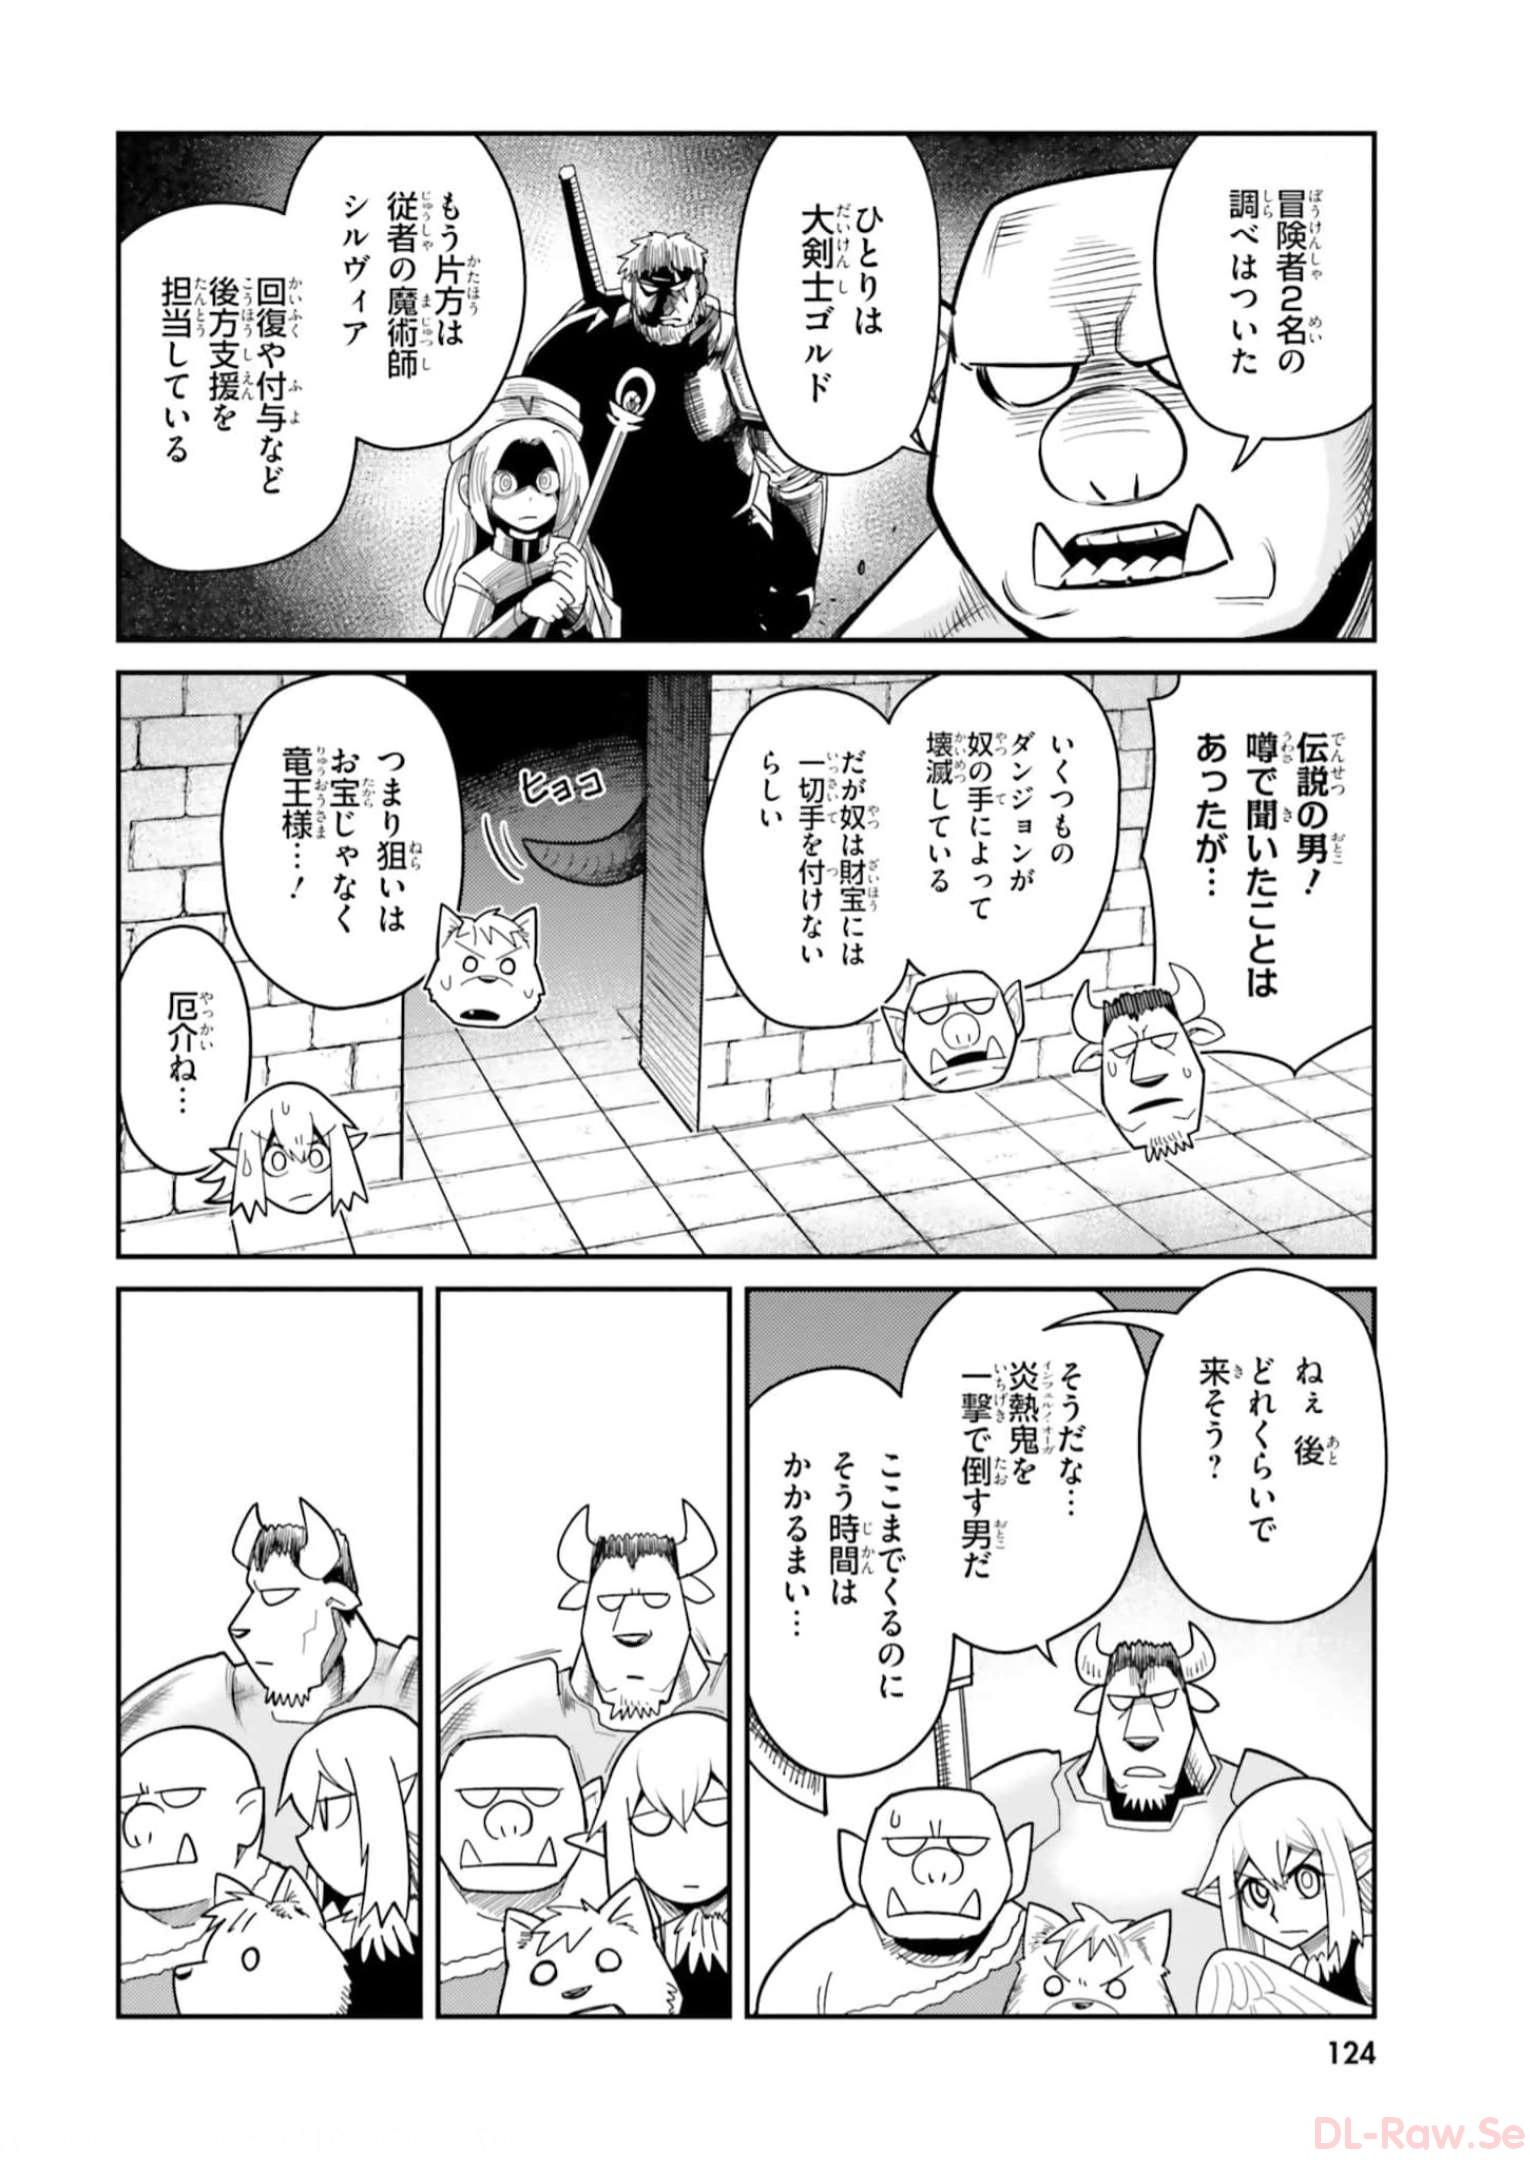 Dungeon no Osananajimi - Chapter 8 - Page 4